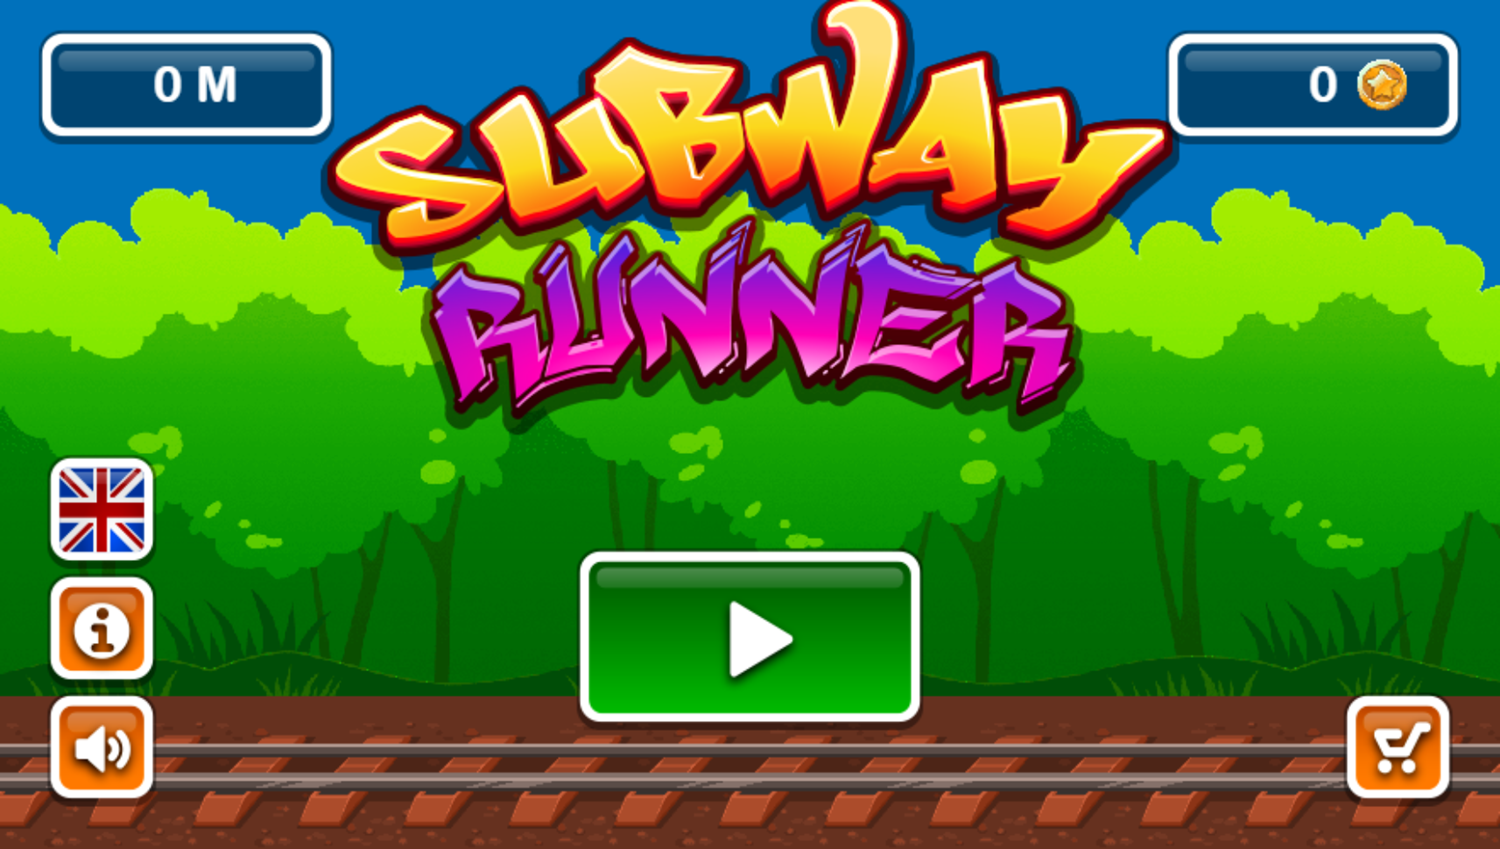 Subway Runner Game Welcome Screen Screenshot.